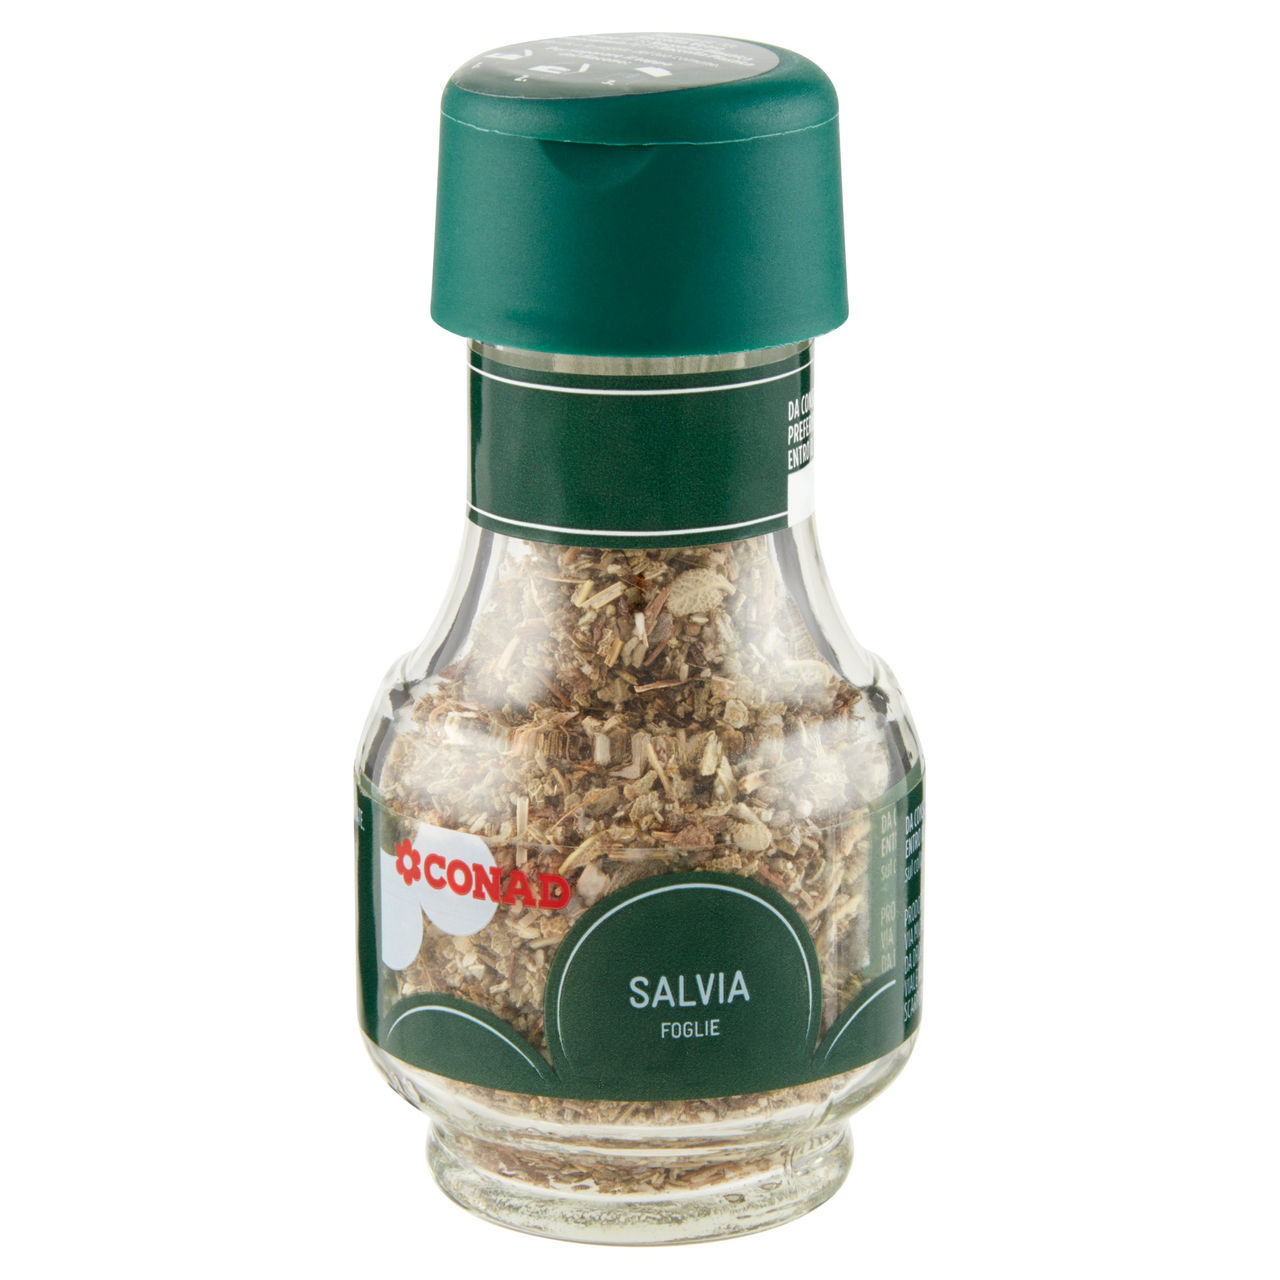 Salvia Foglie 12 g Conad in vendita online